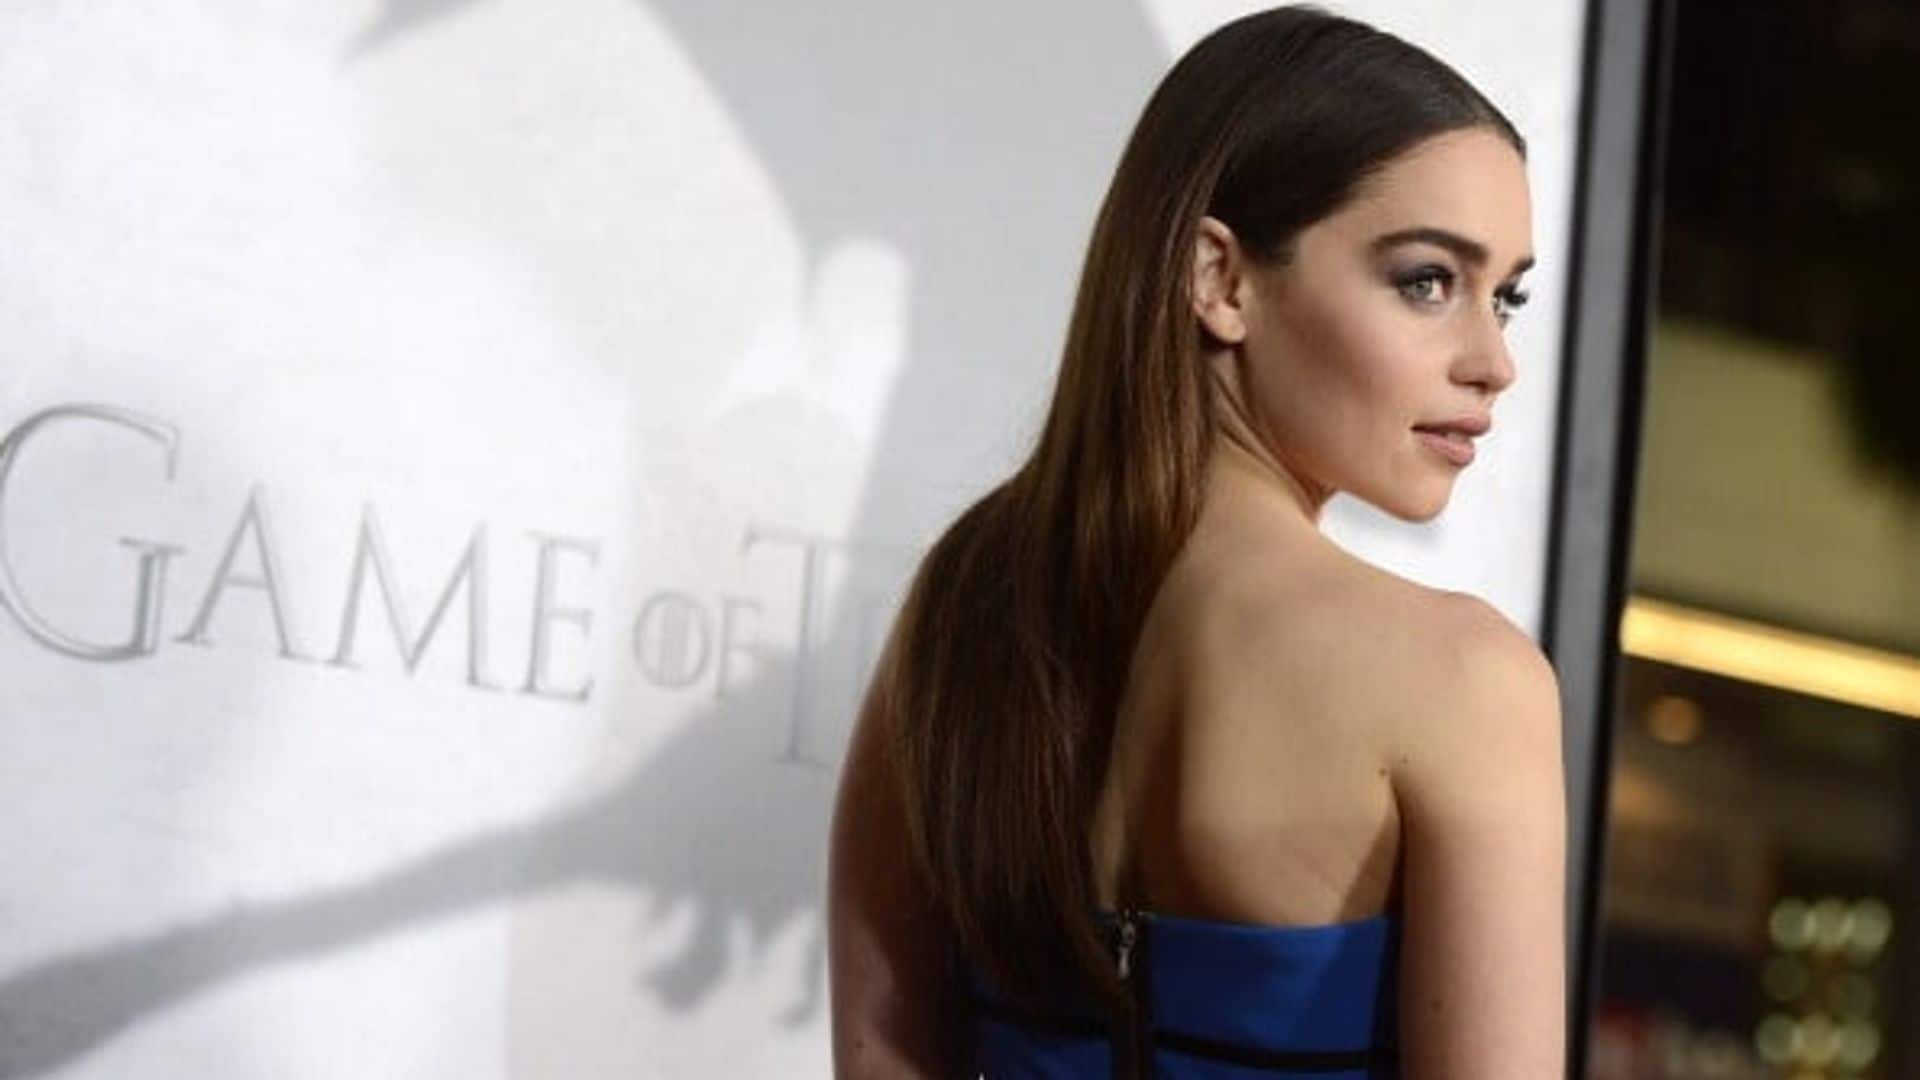 'Game of Thrones' star Emilia Clarke's 12 best red carpet looks